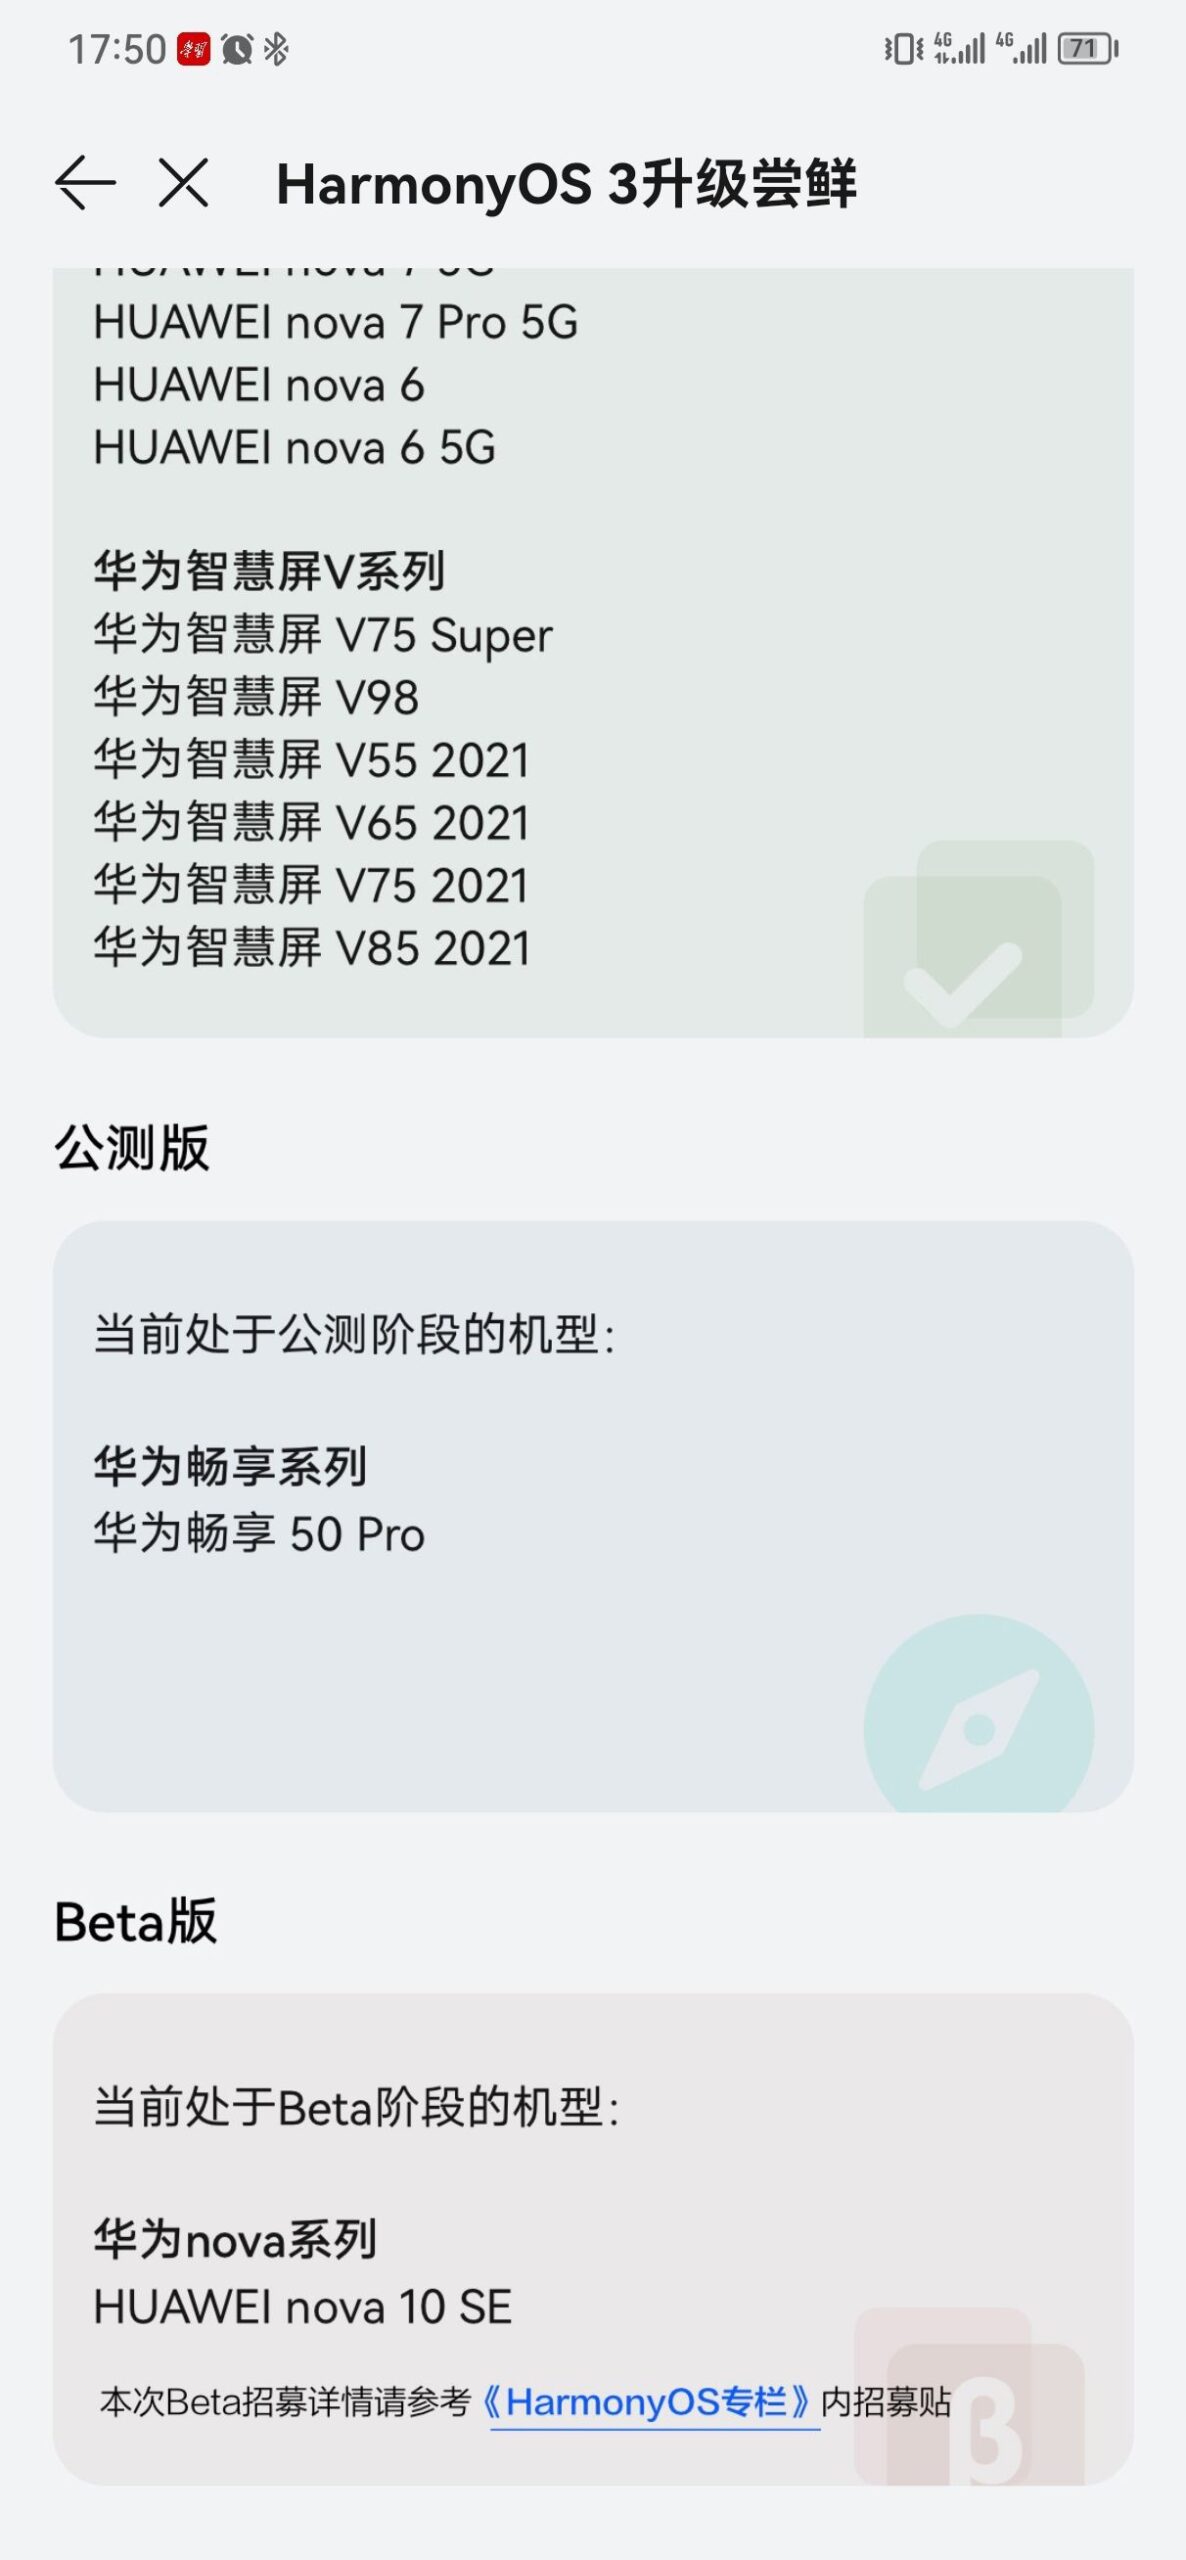 Huawei Nova 10 SE HarmonyOS 3 Beta recruitment starts